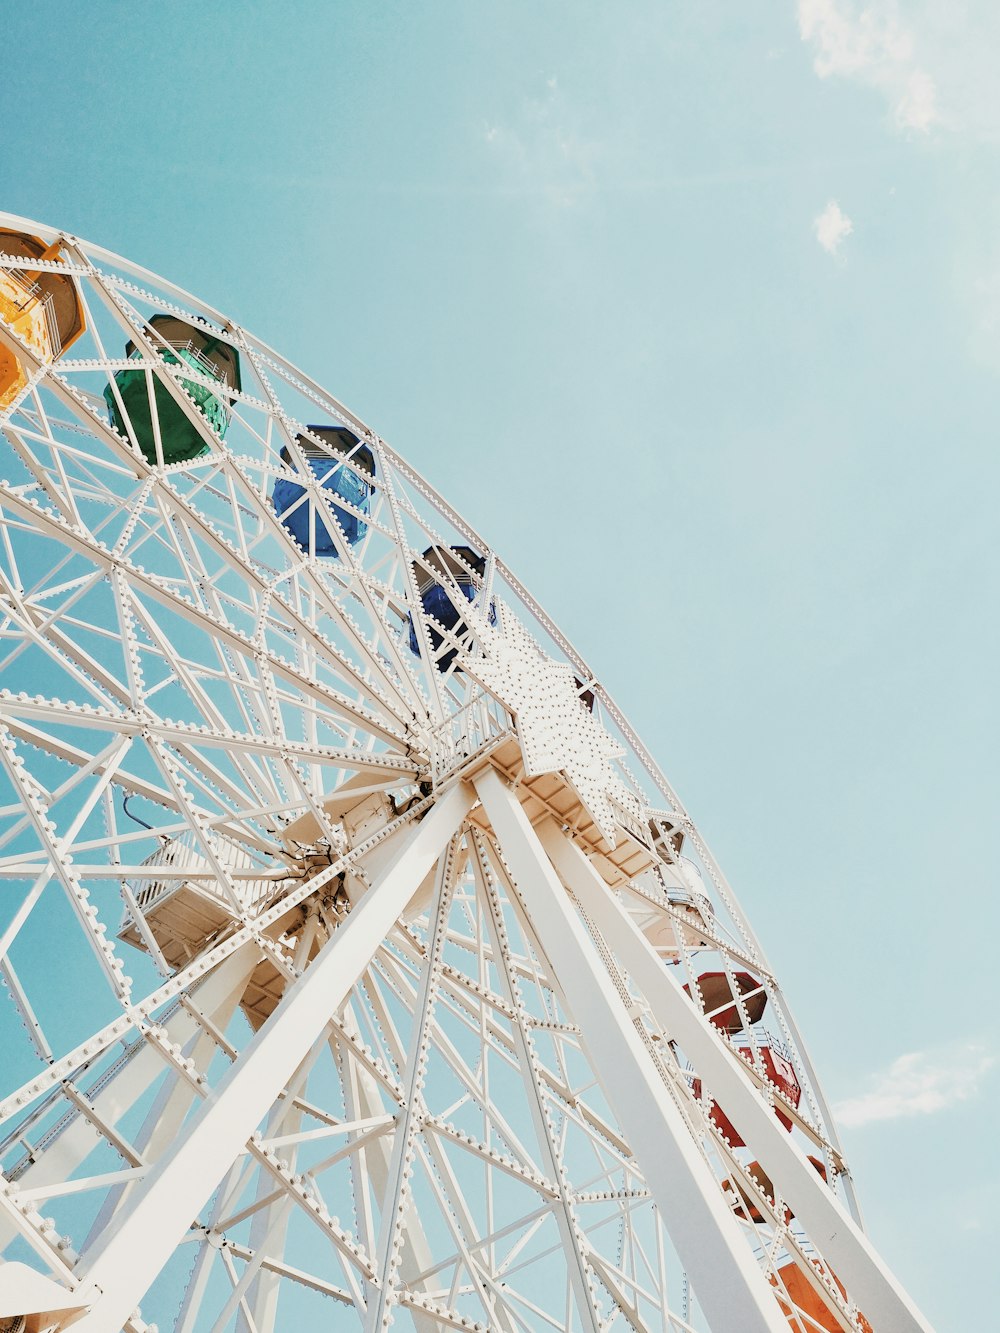 white Ferris wheel across blue sky